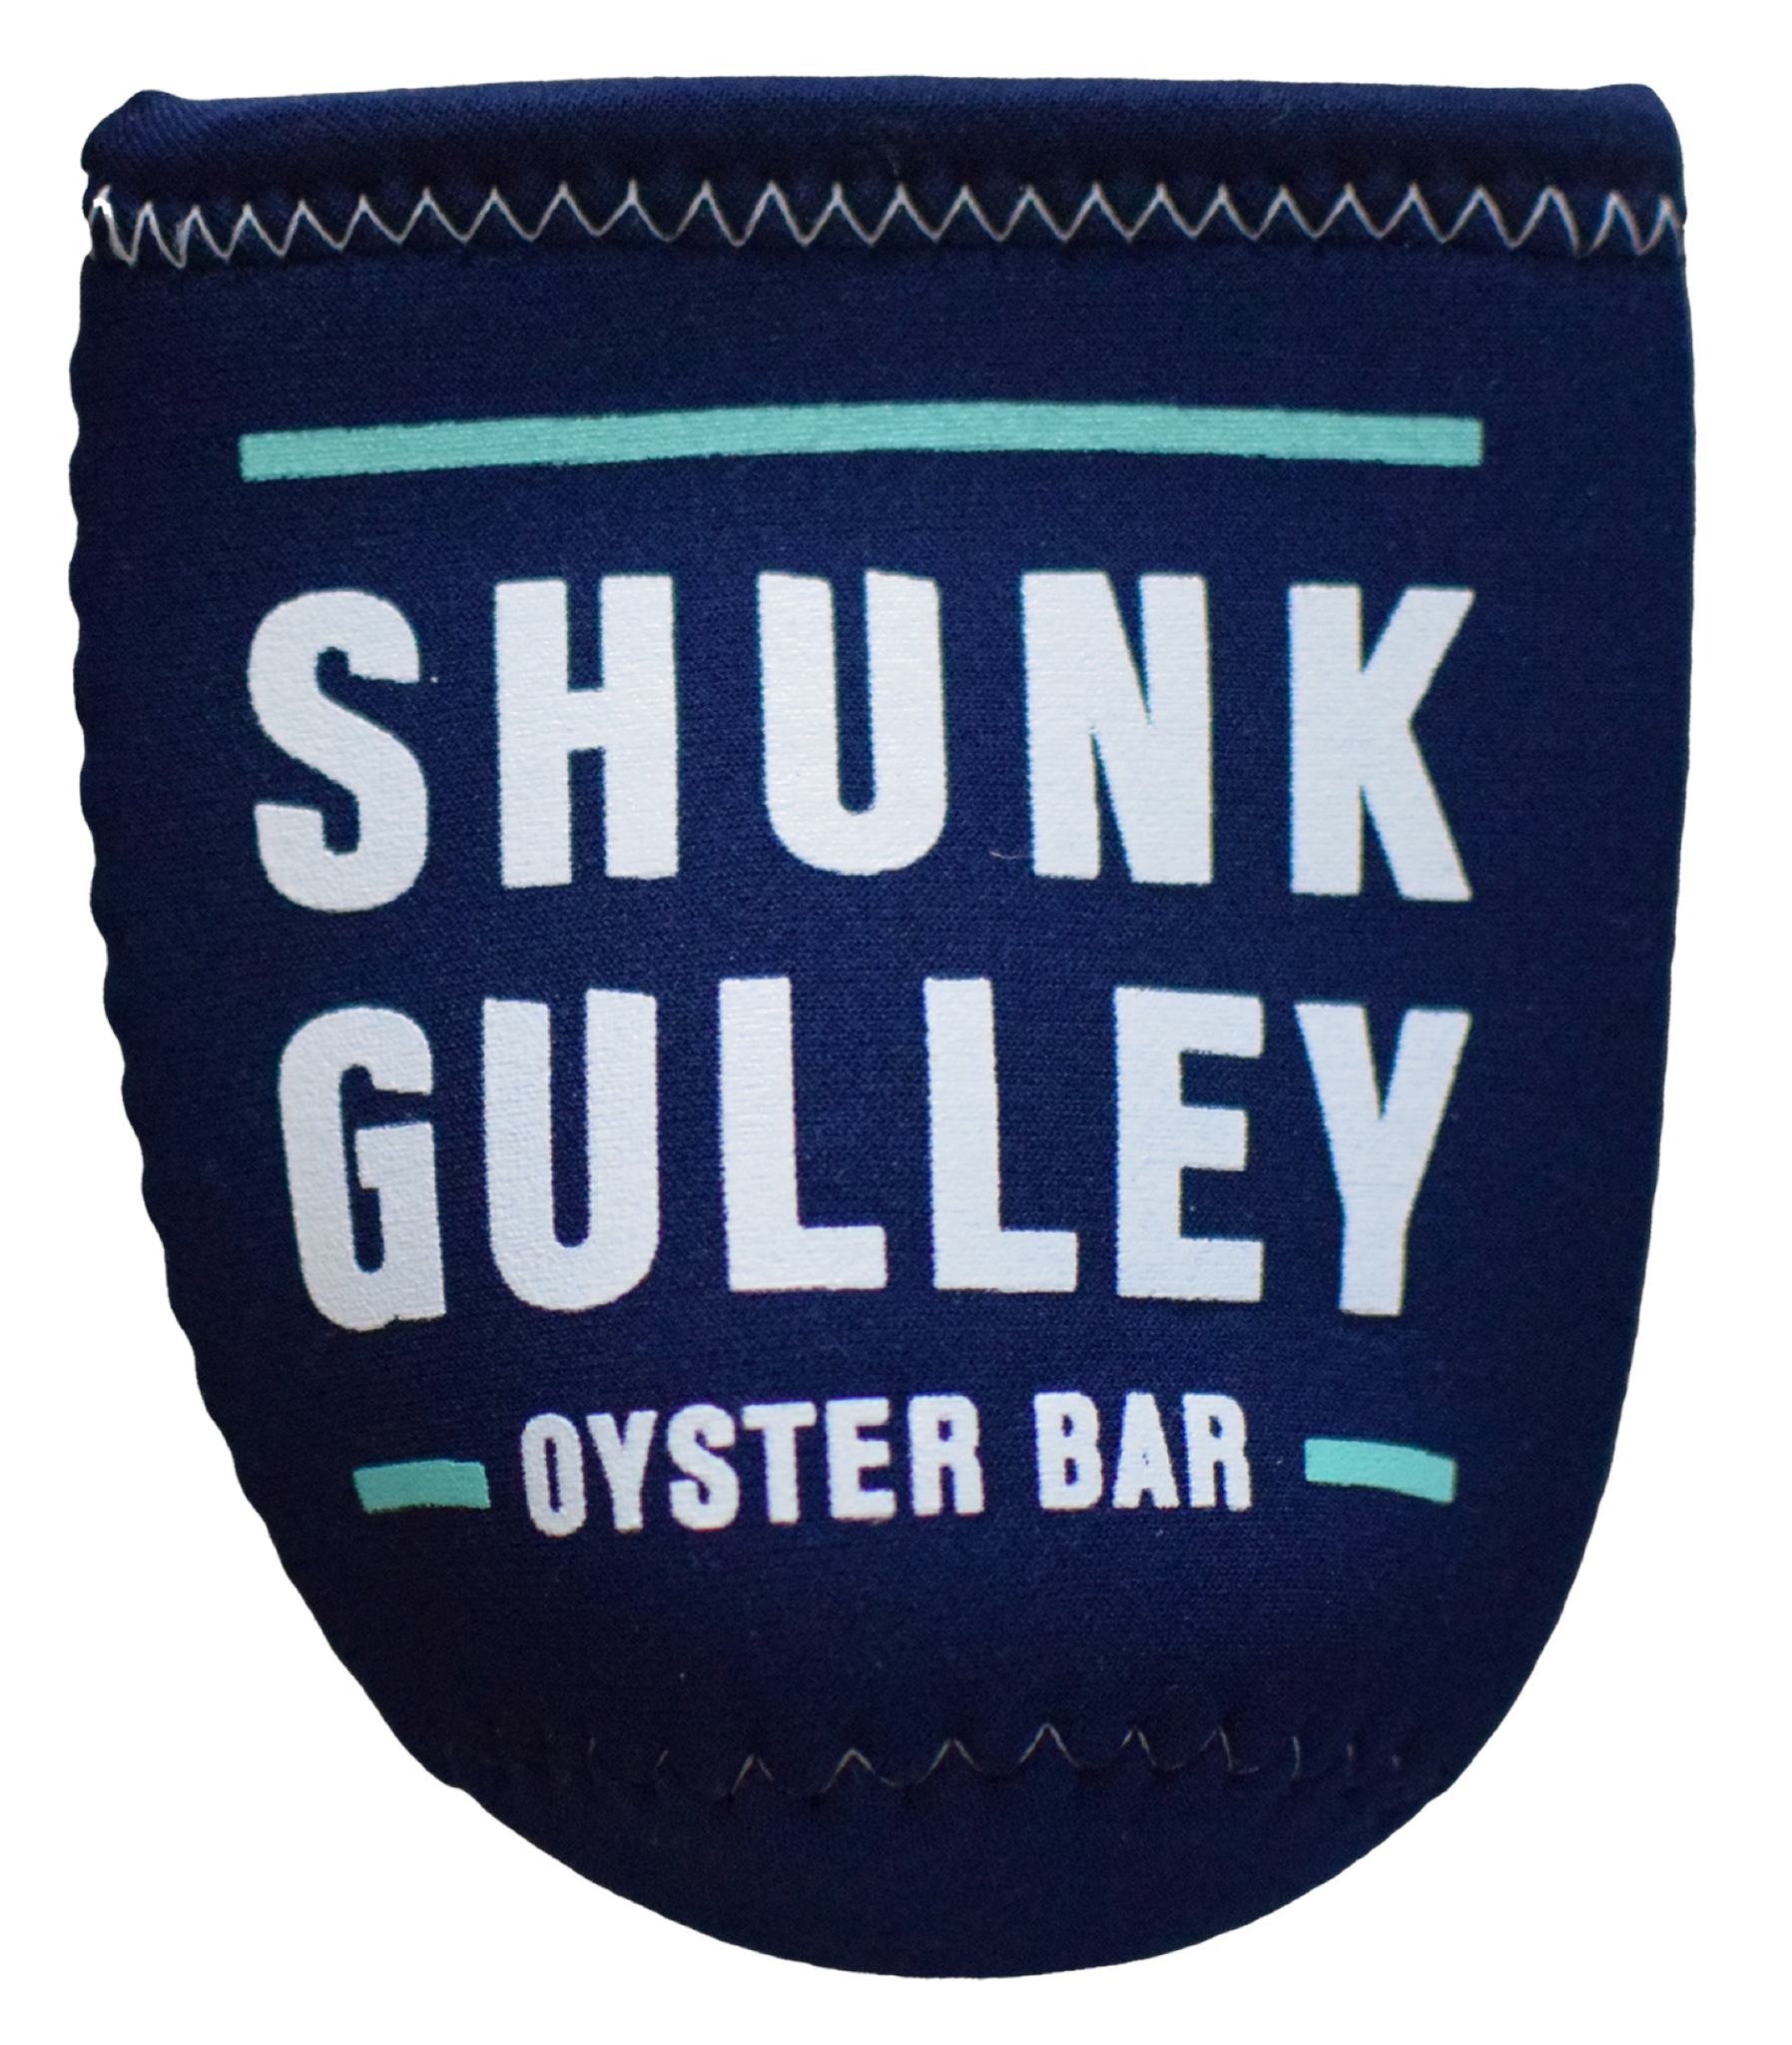 Shunk Gulley Bottle Koozie – Shunk Gulley Store